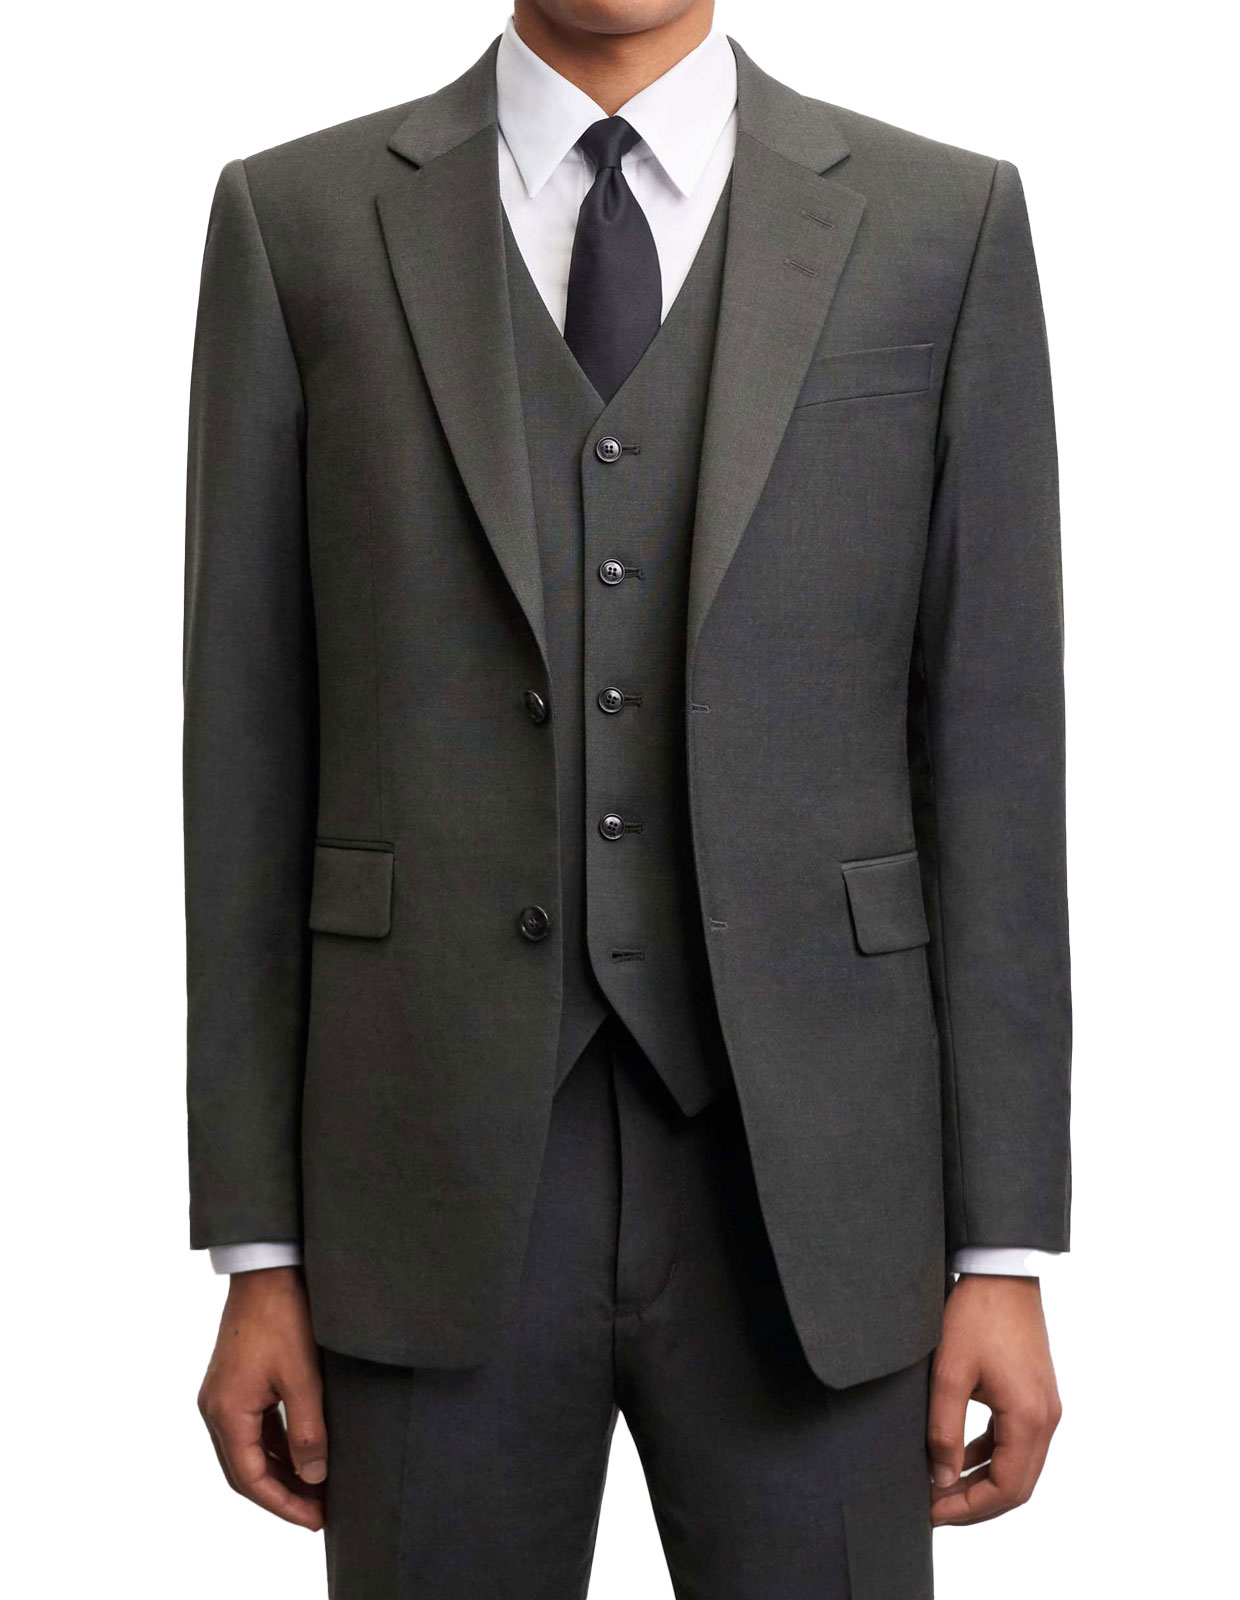 Wayde Waistcoat Suit Mix & Match Olive Extreme